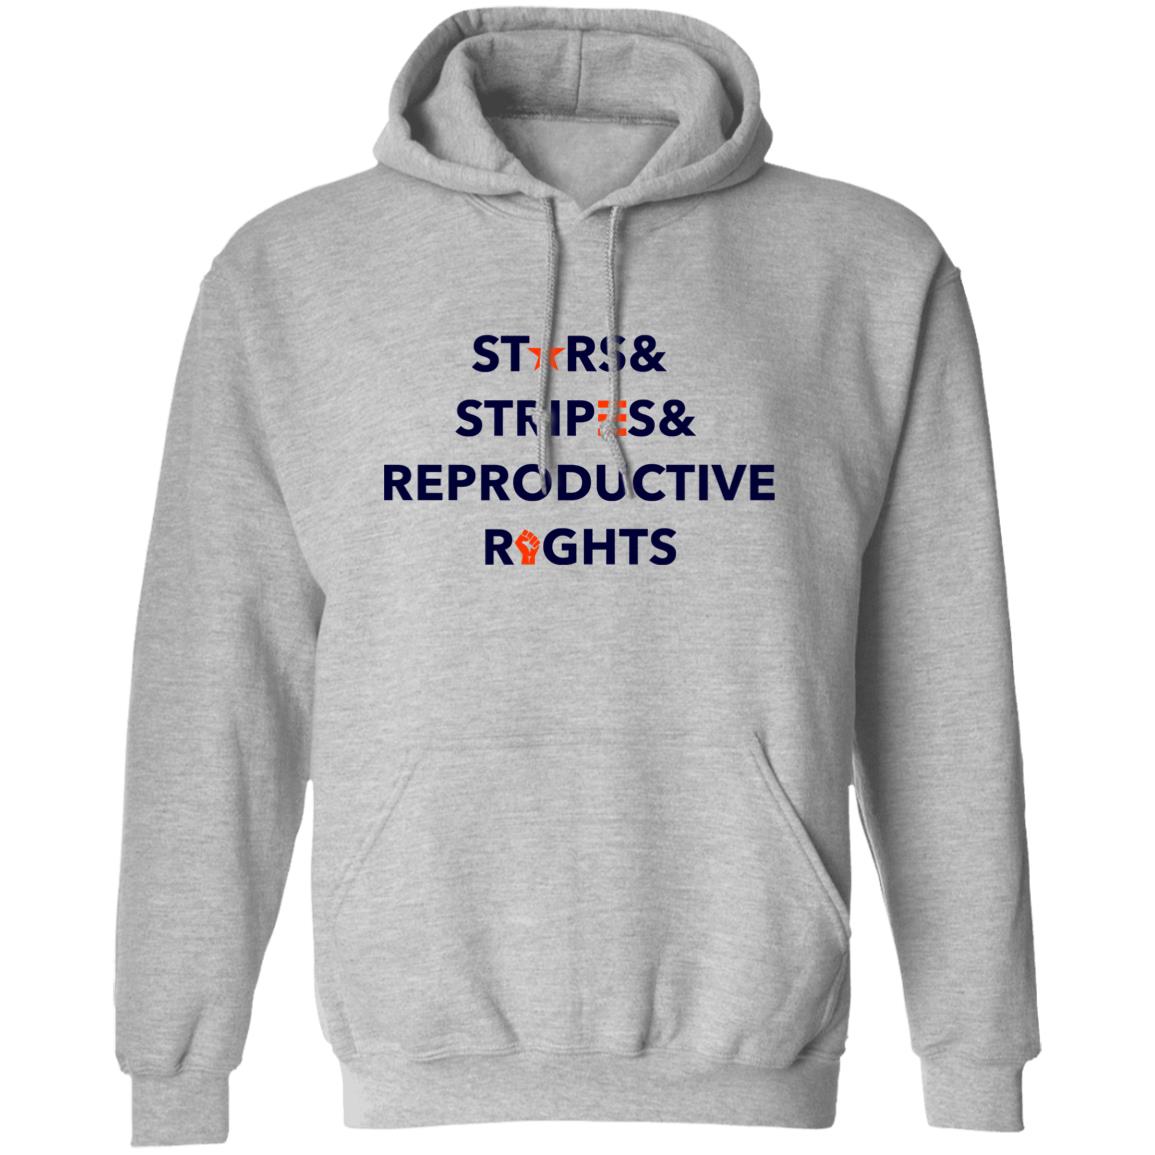 White Sox Liam Hendriks Stars Stripes Reproductive Rights Shirt